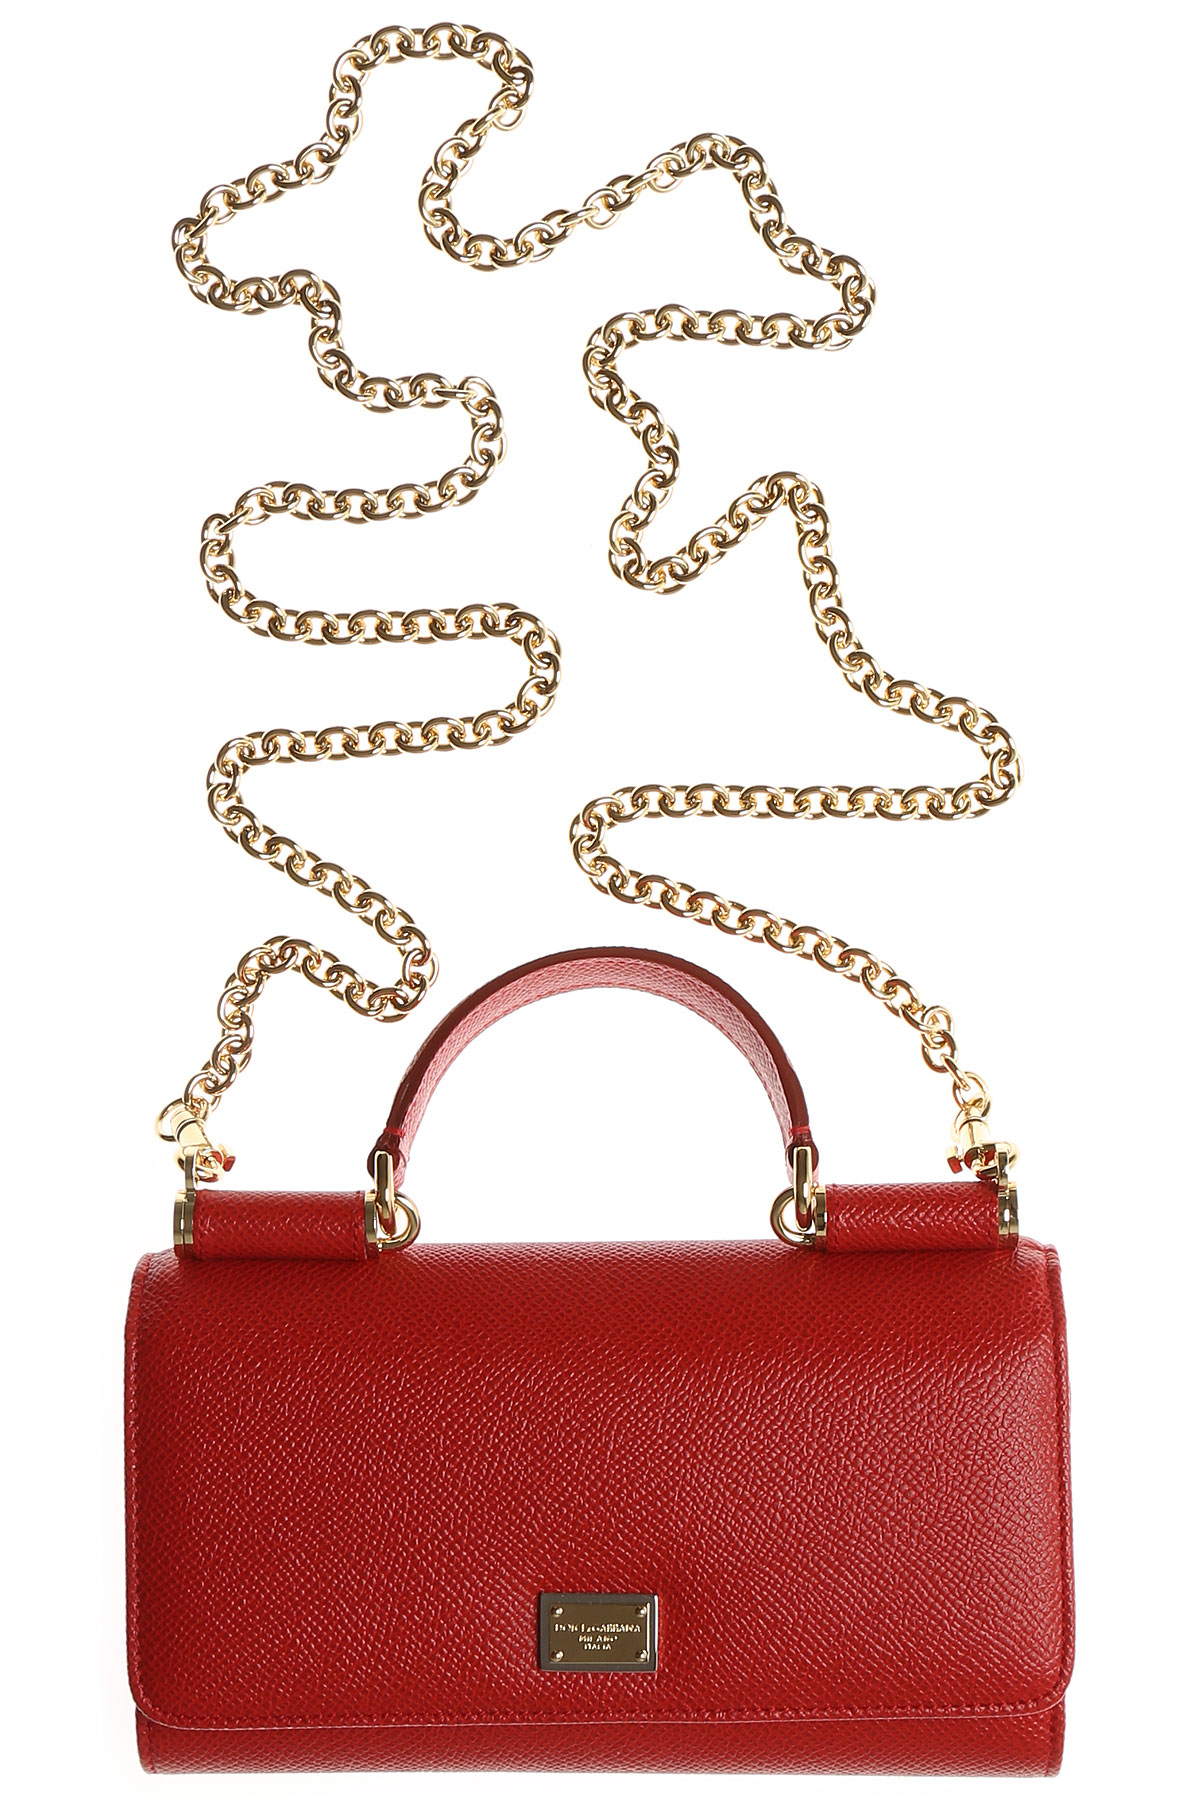 Handbags Dolce & Gabbana, Style code: bi0869-a1001-80303